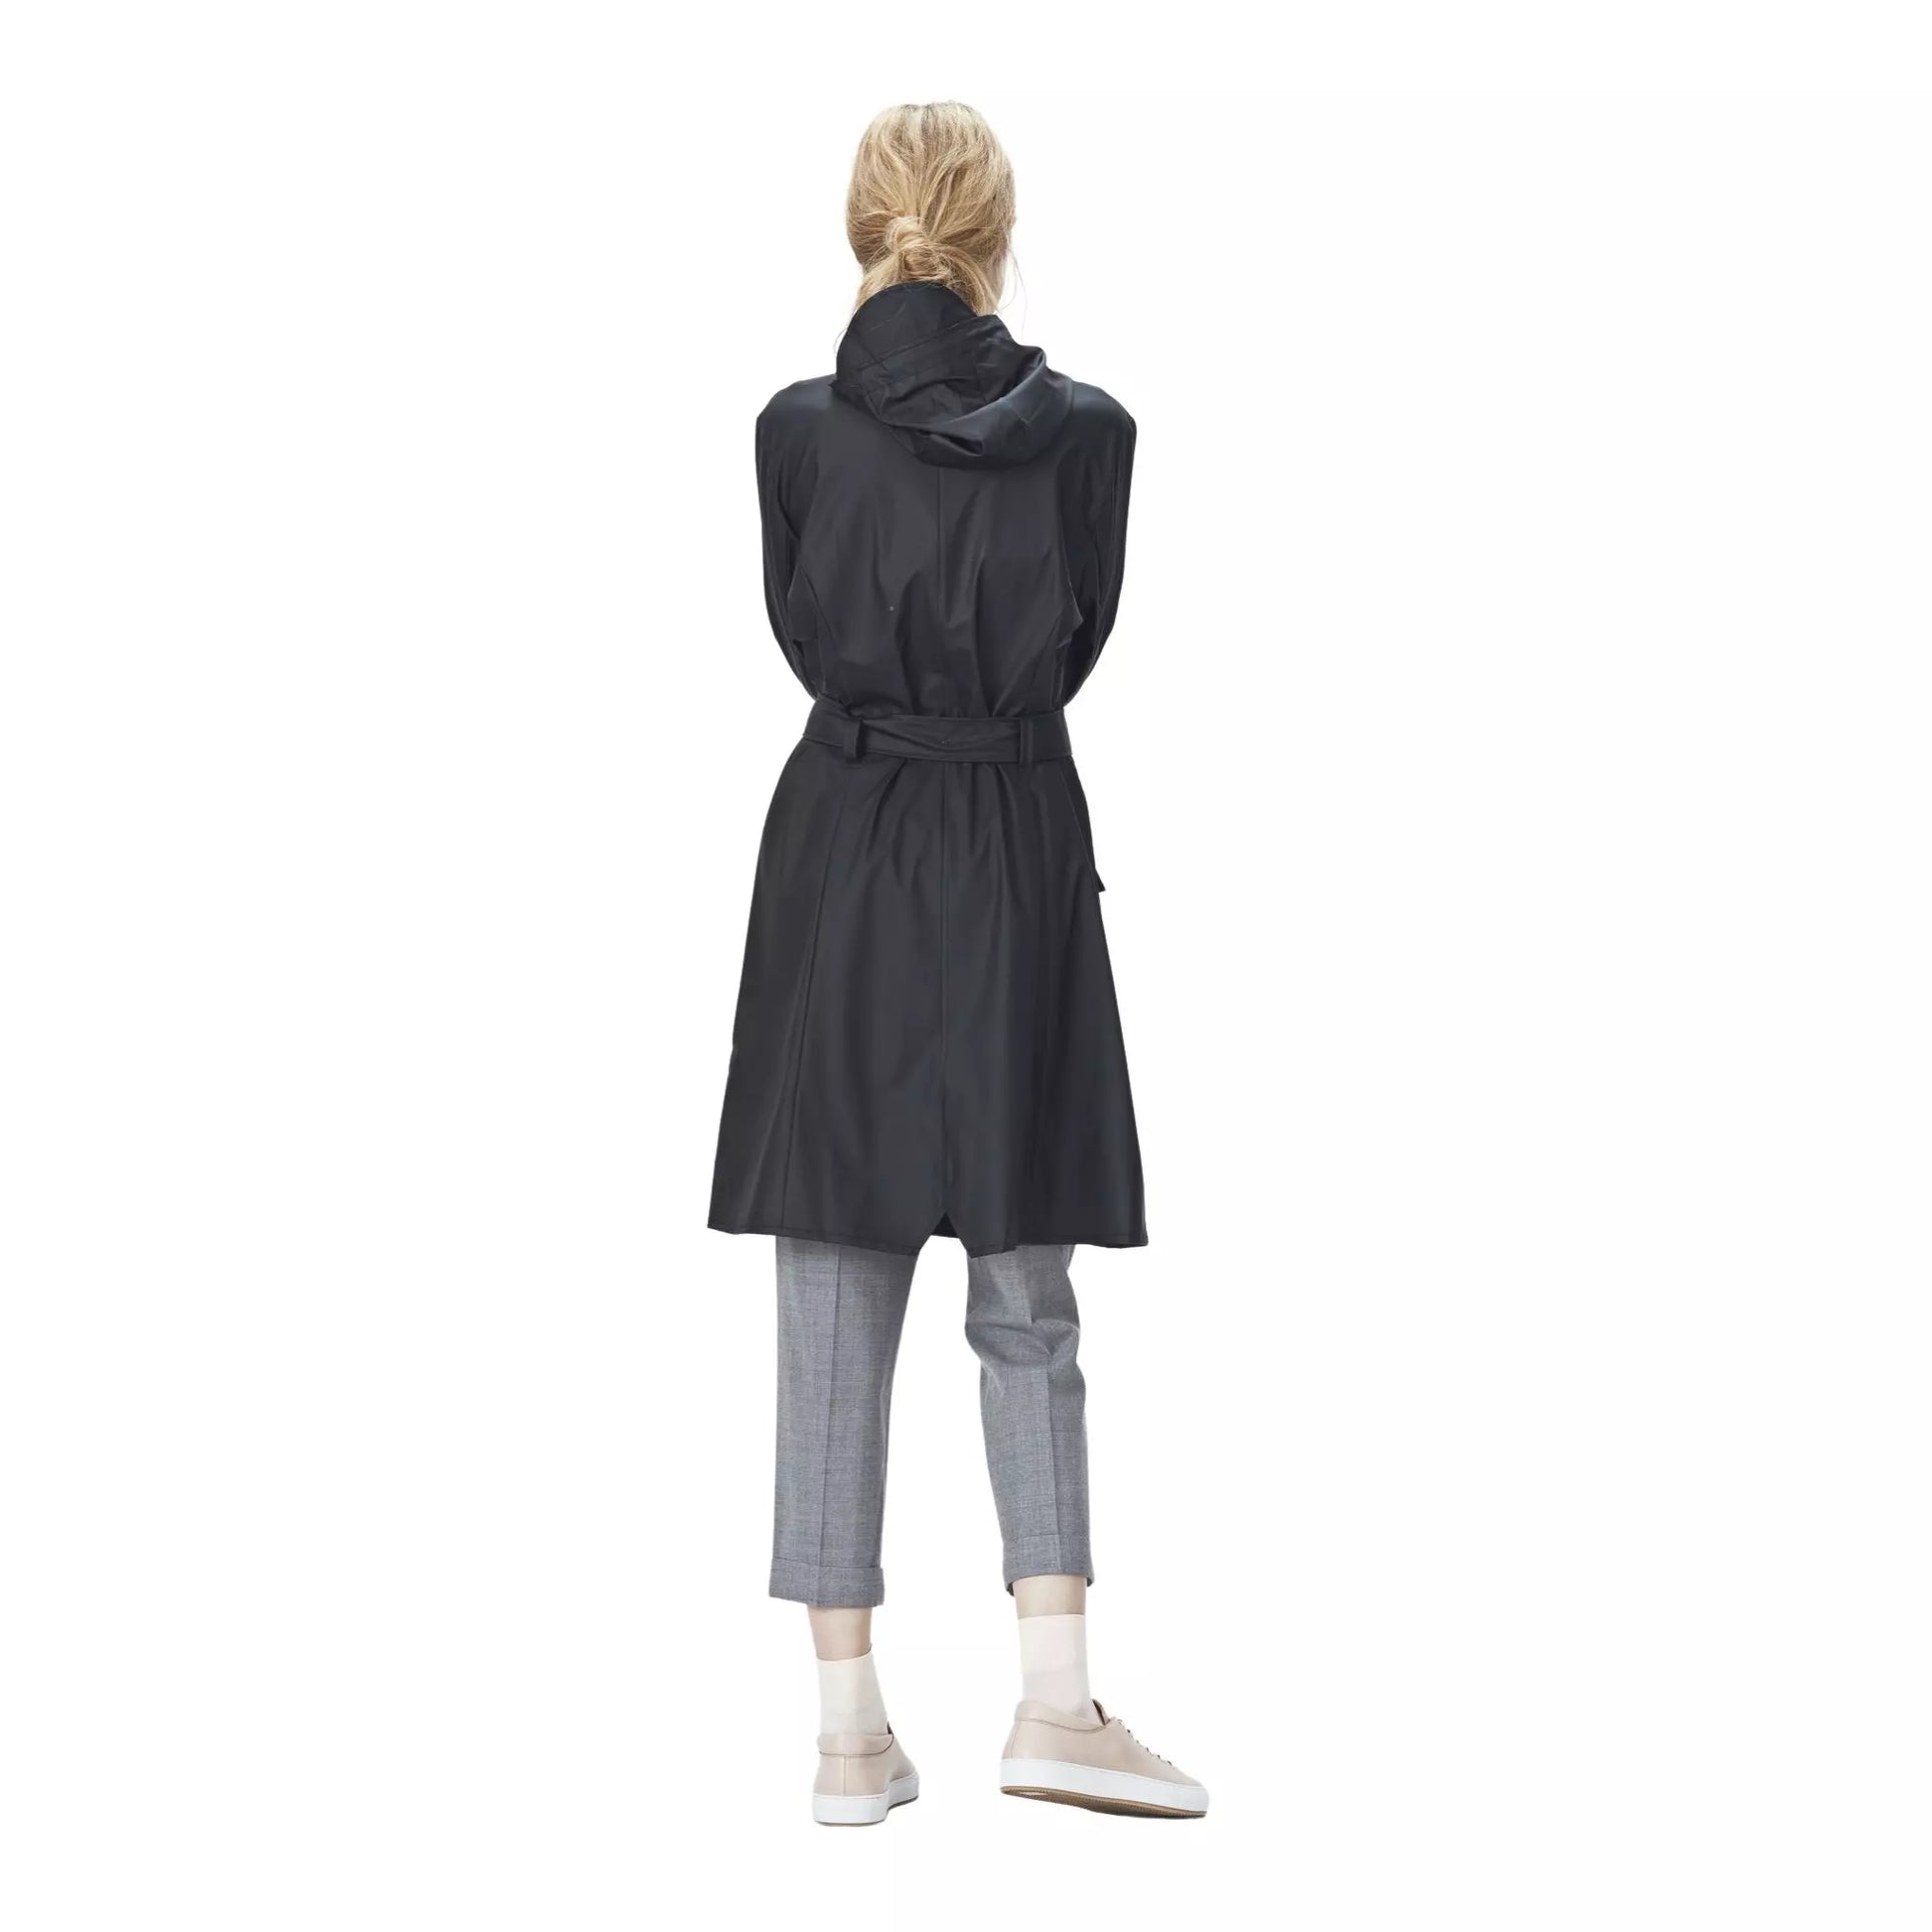 Rains waterproof curve jacket black worn by woman back view